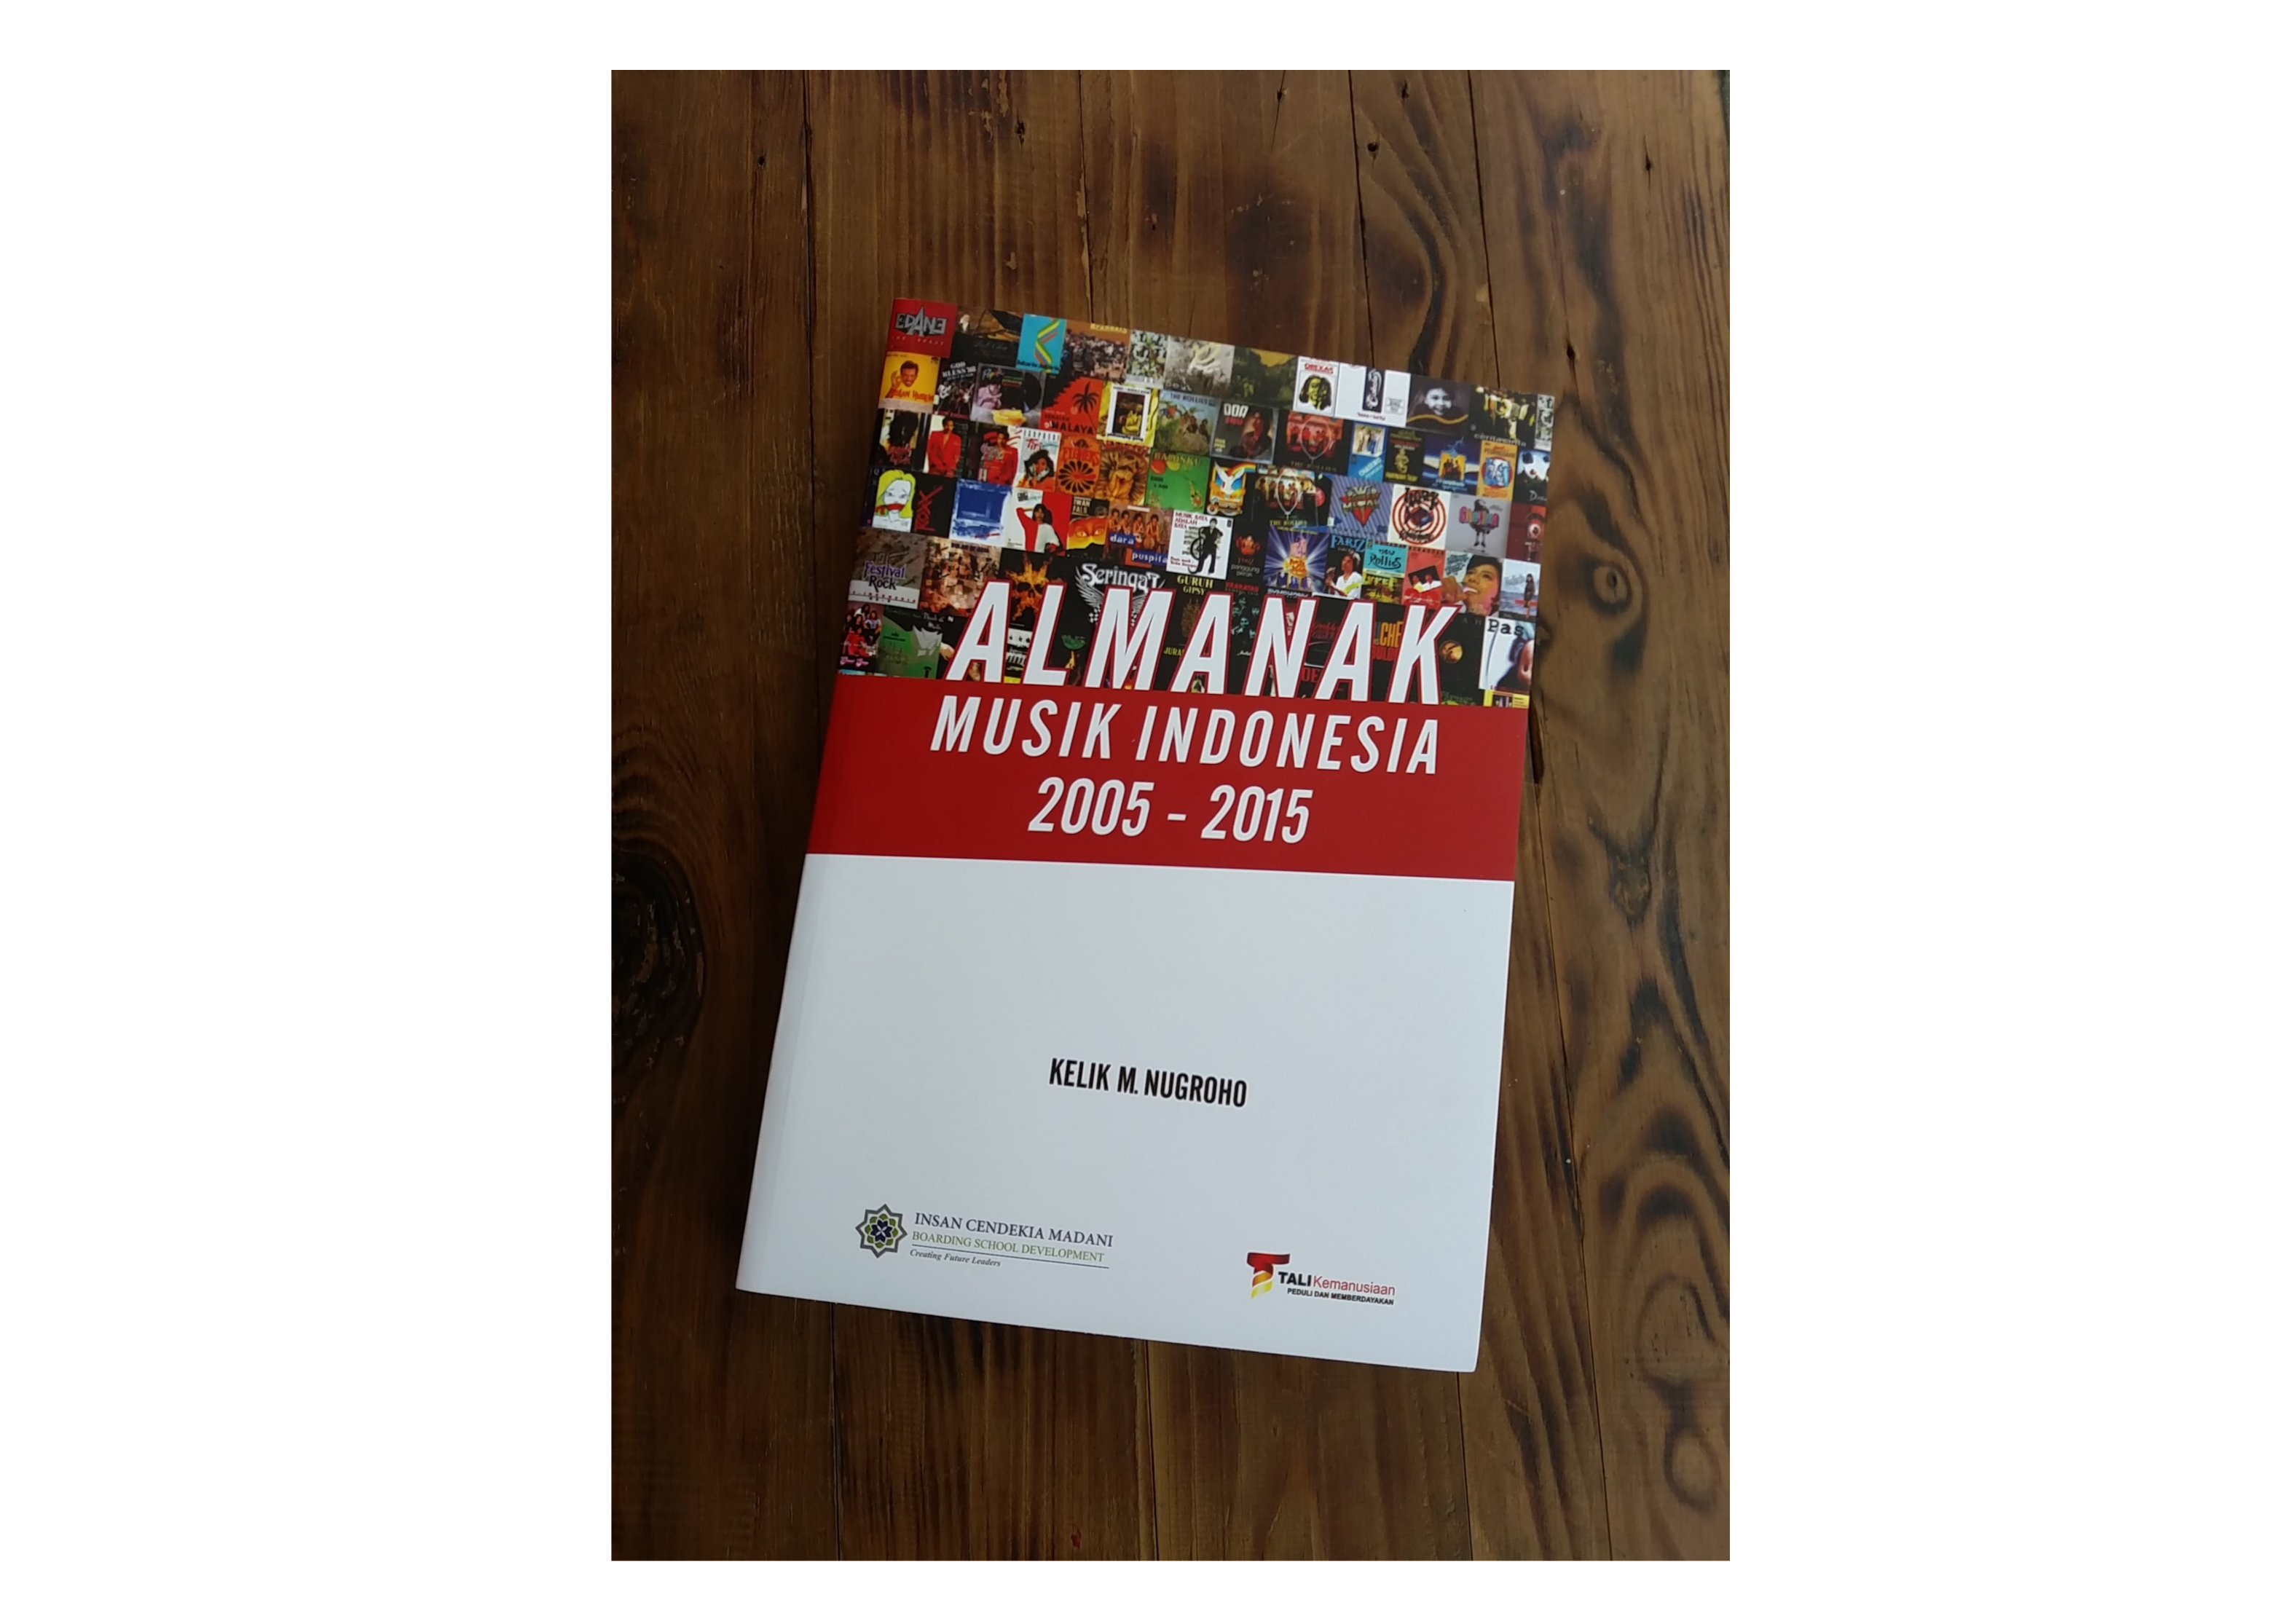 Almanak Musik Indonesia 2005 - 2015. (Foto: Tokopedia)